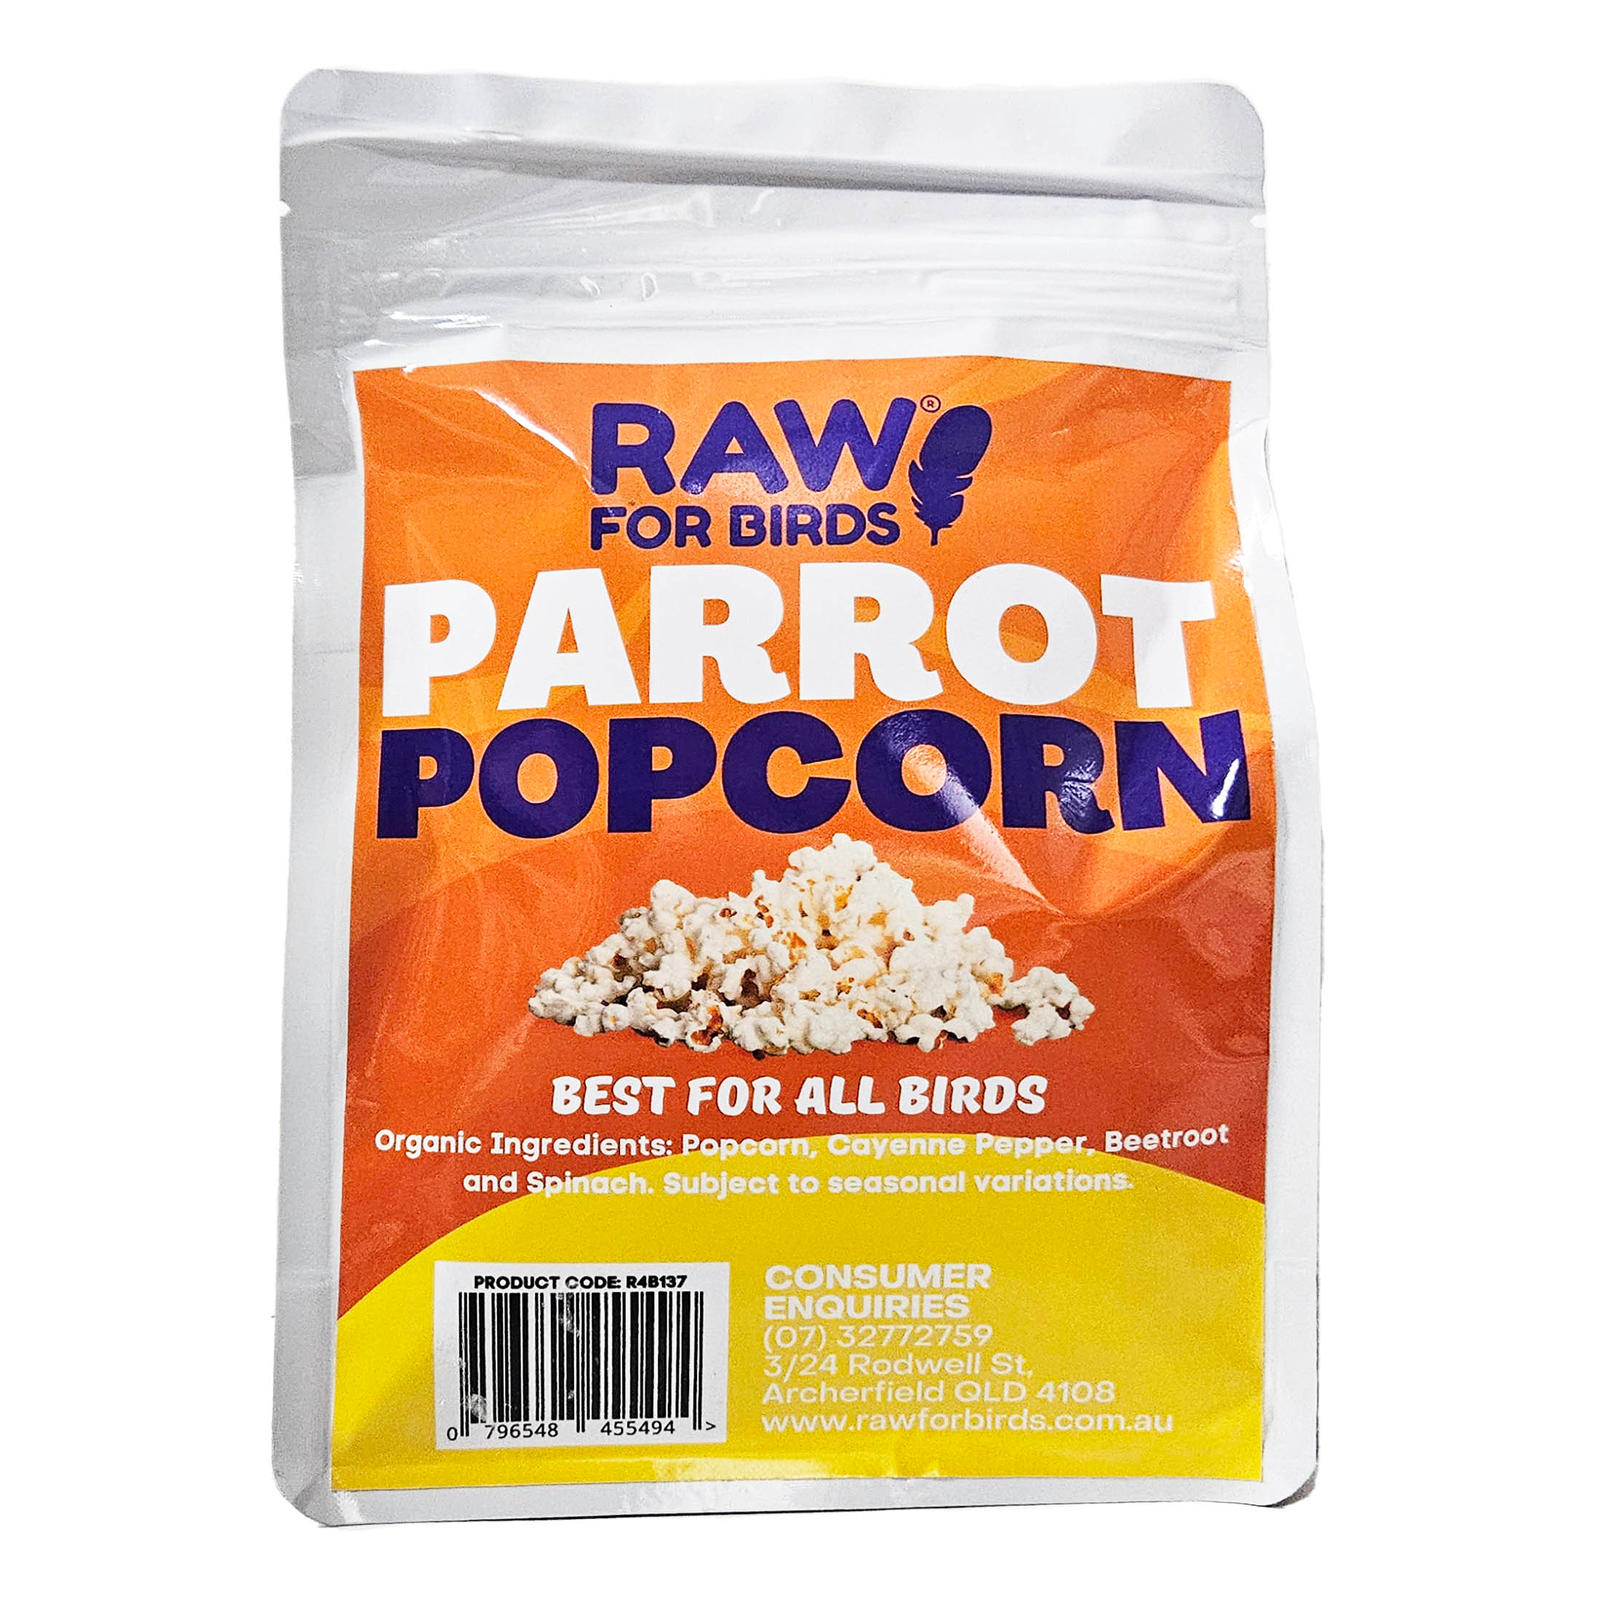 Raw for Birds Parrot Popcorn